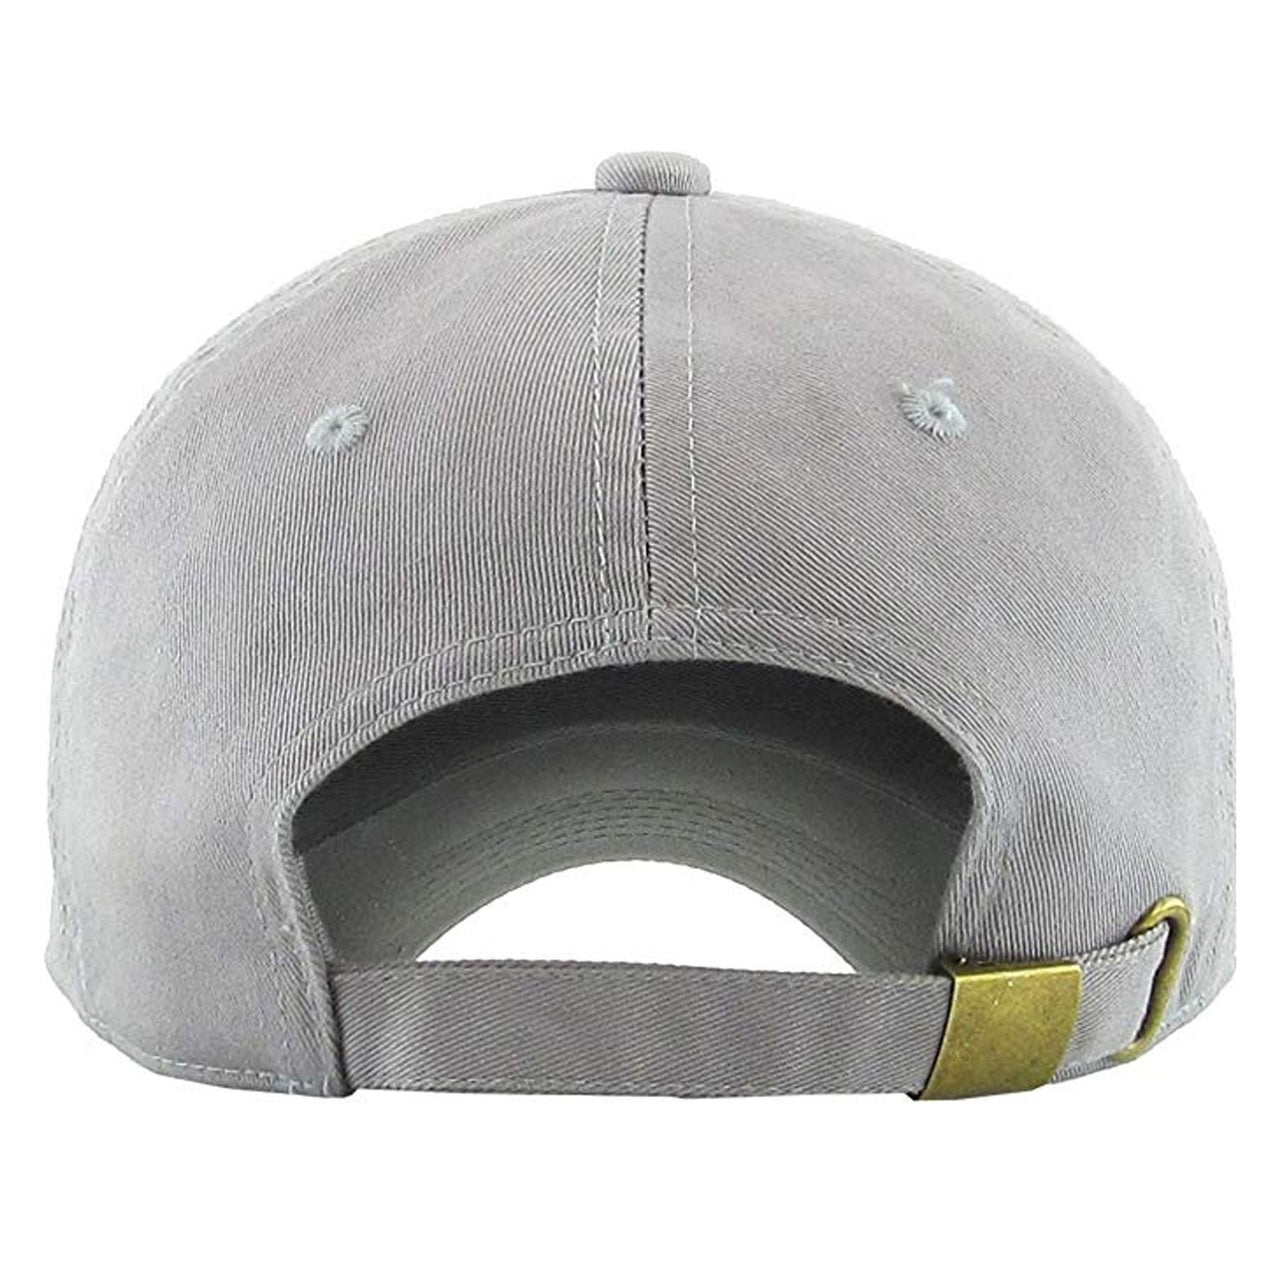 Atmosphere Grey 13s Distressed Dad Hat | Atmosphere, Light Gray